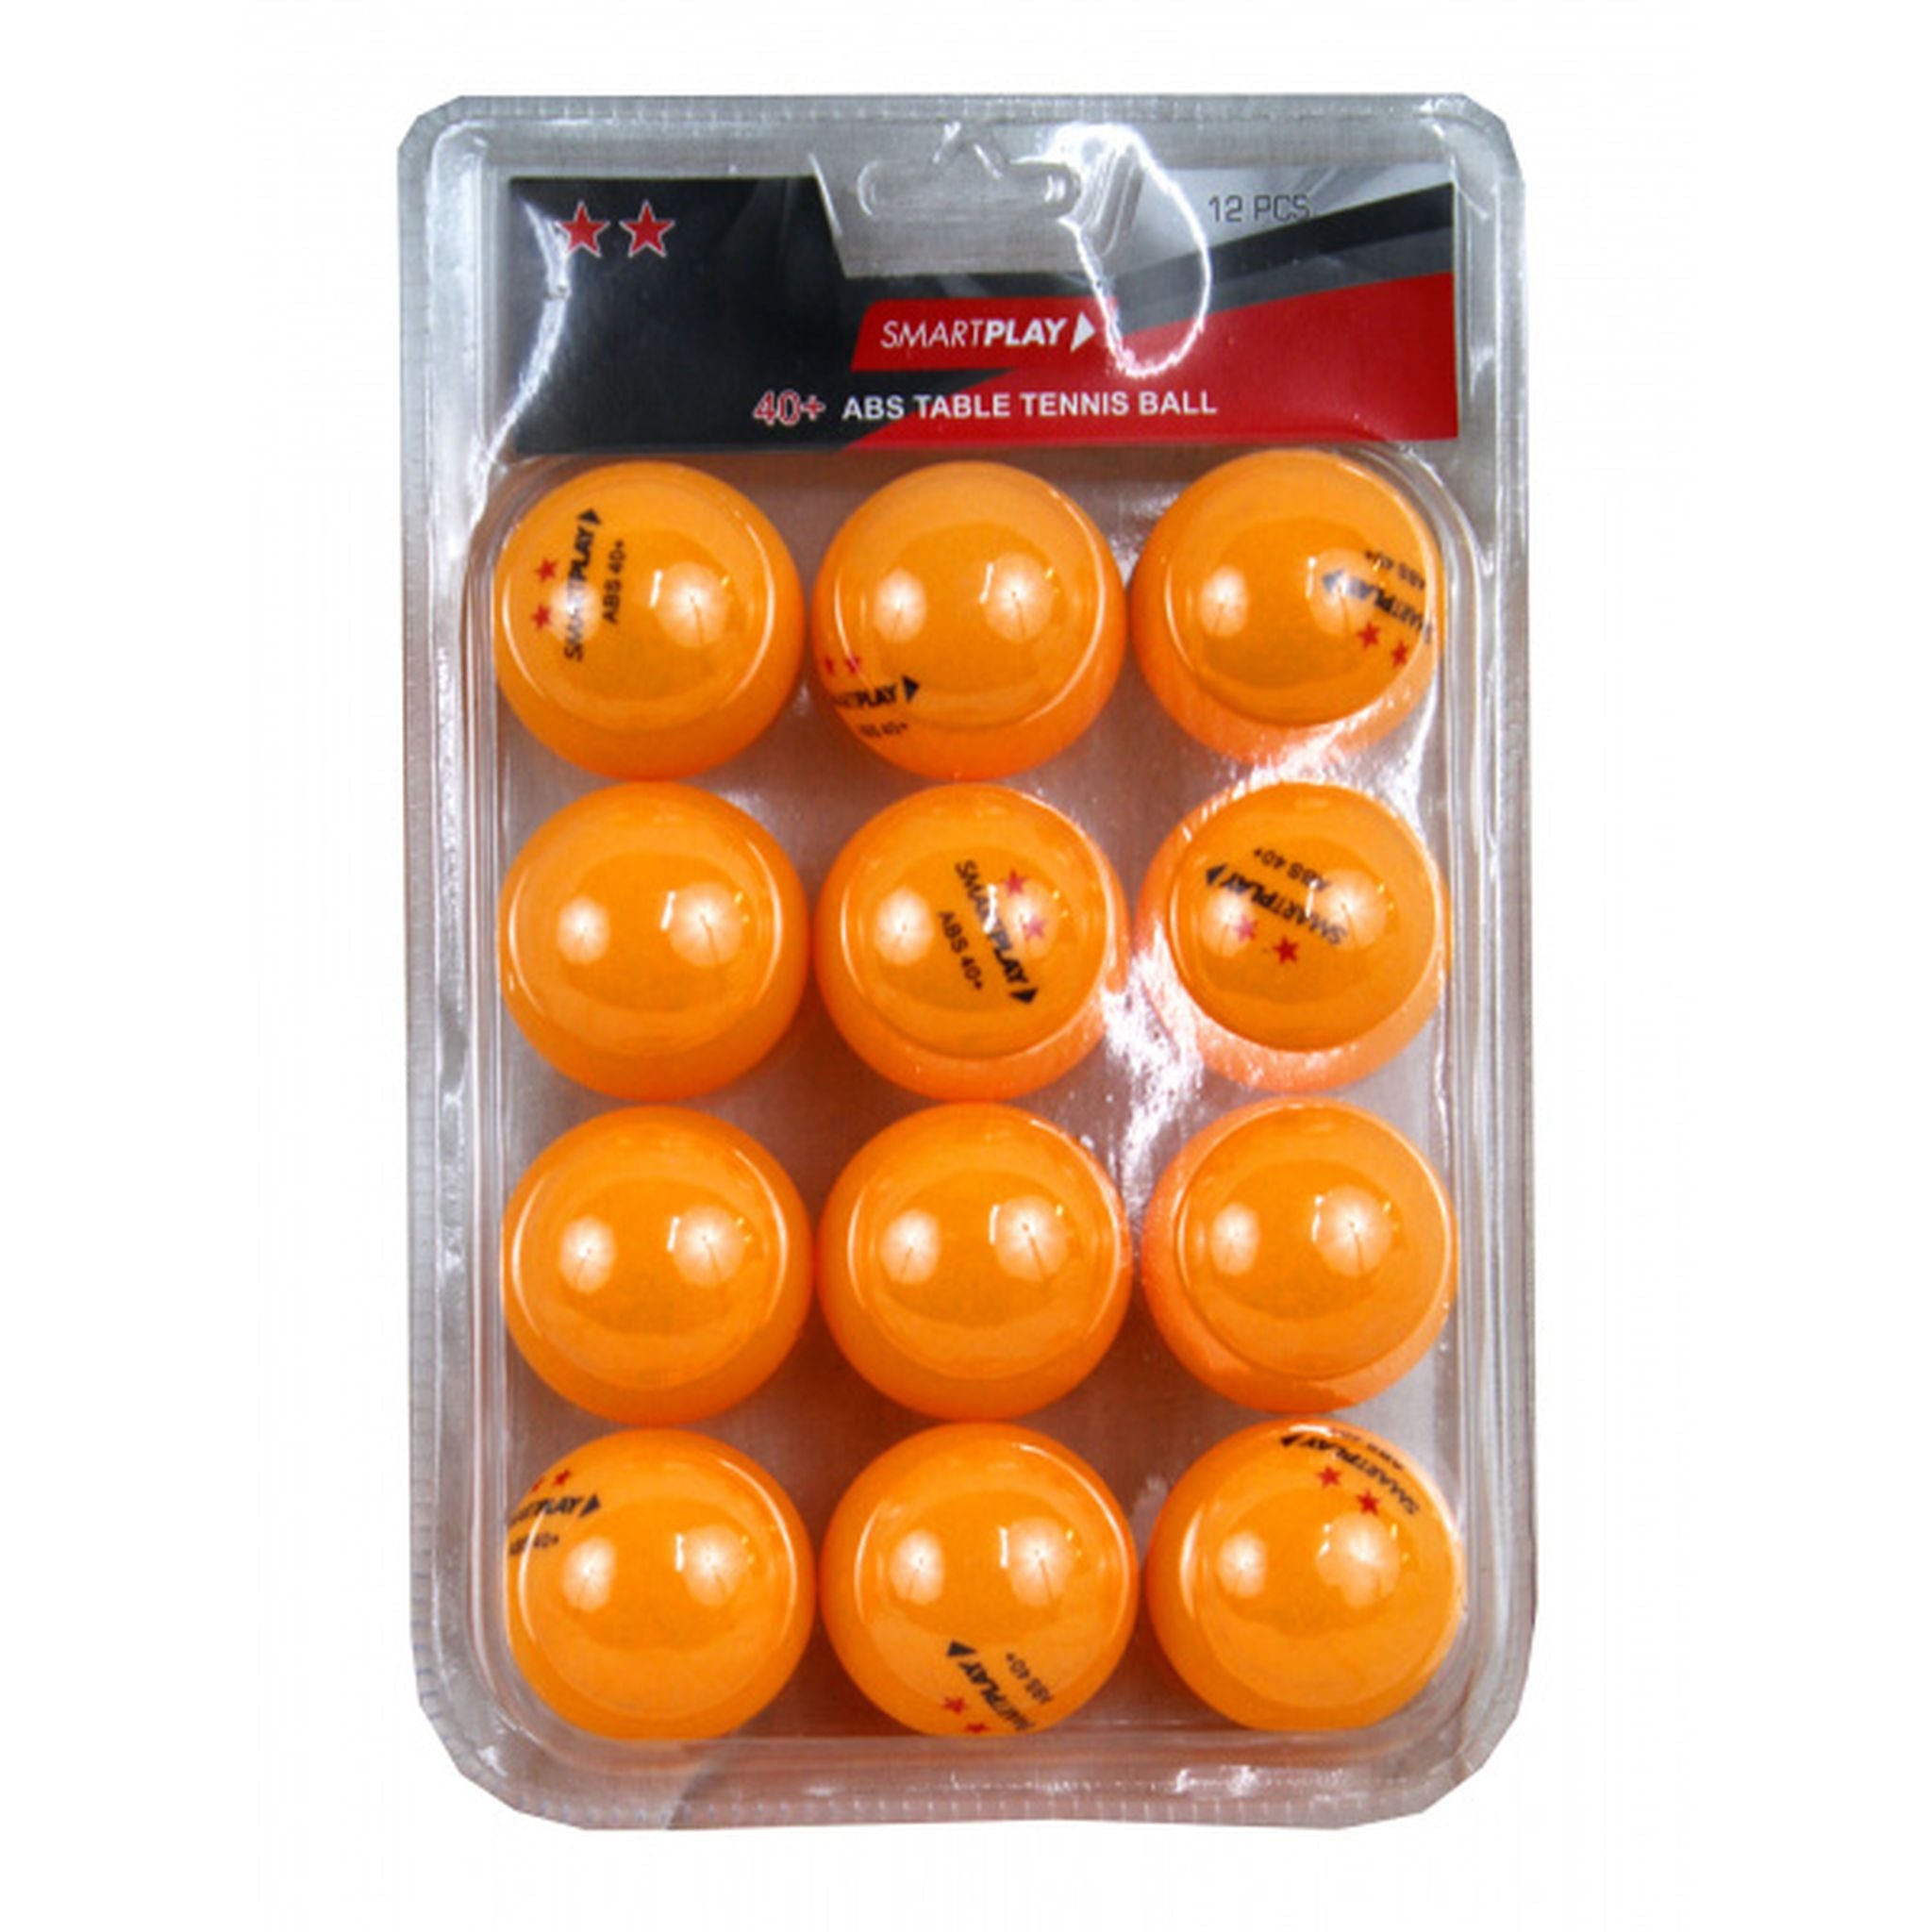 SMARTPLAY 2 Star Orange Table Tennis Balls - PACK OF 12